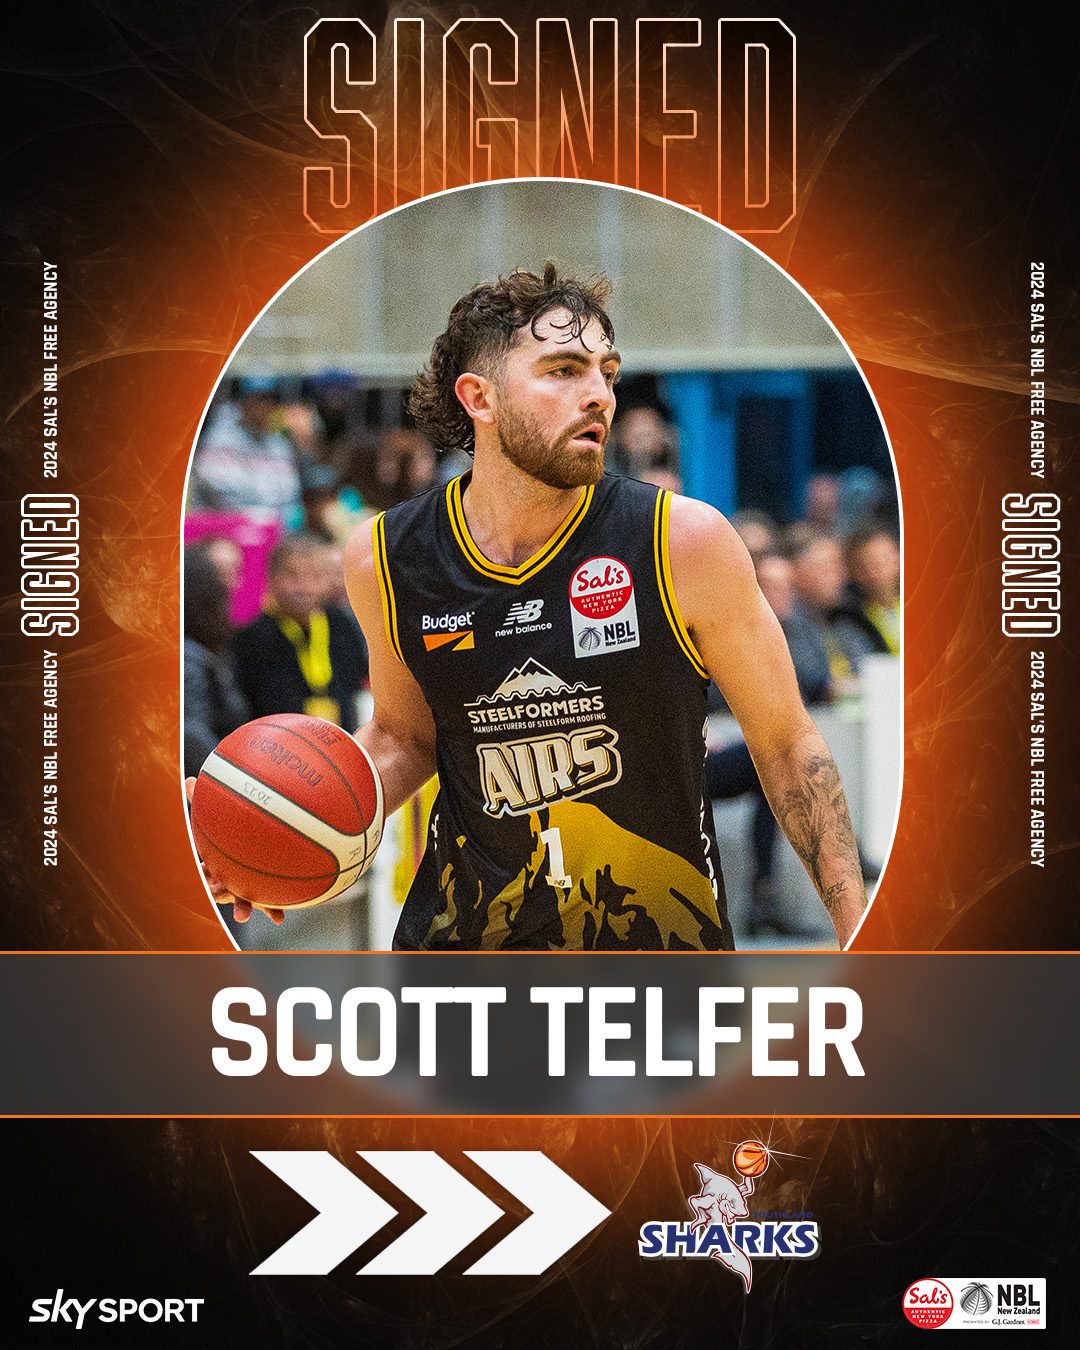 Scott Telfer